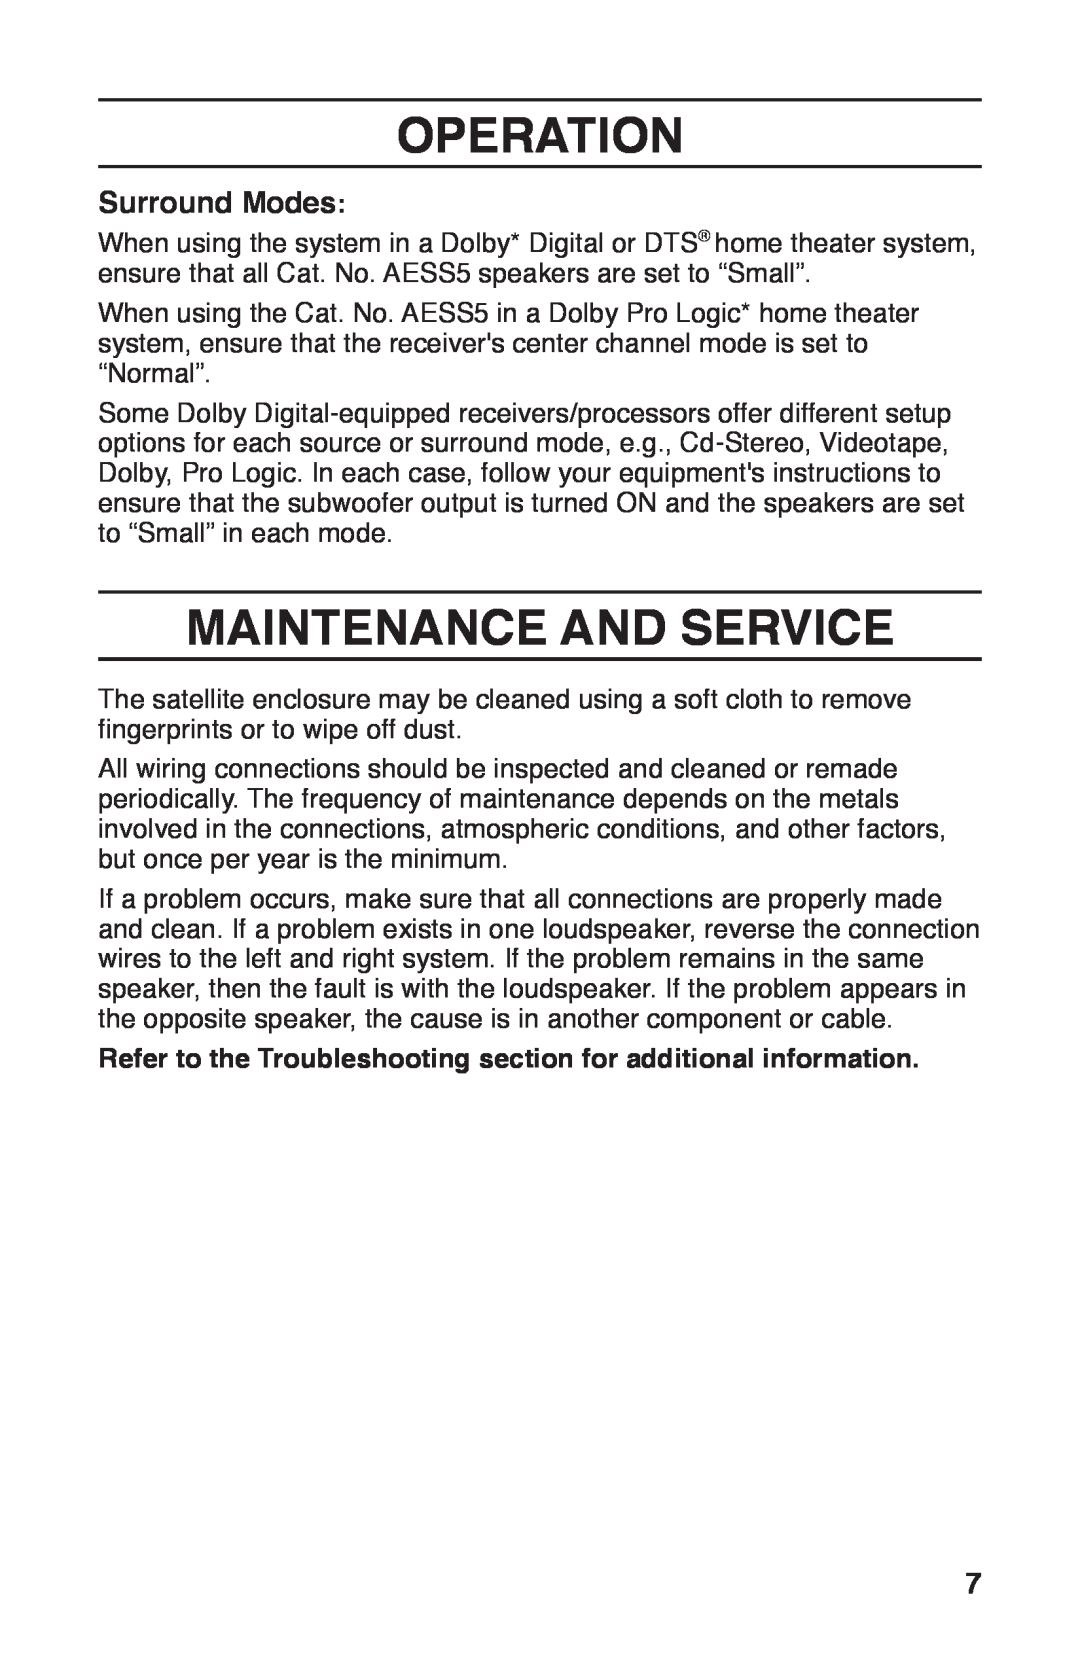 Leviton AESS5 manual Operation, Maintenance And Service, Surround Modes 